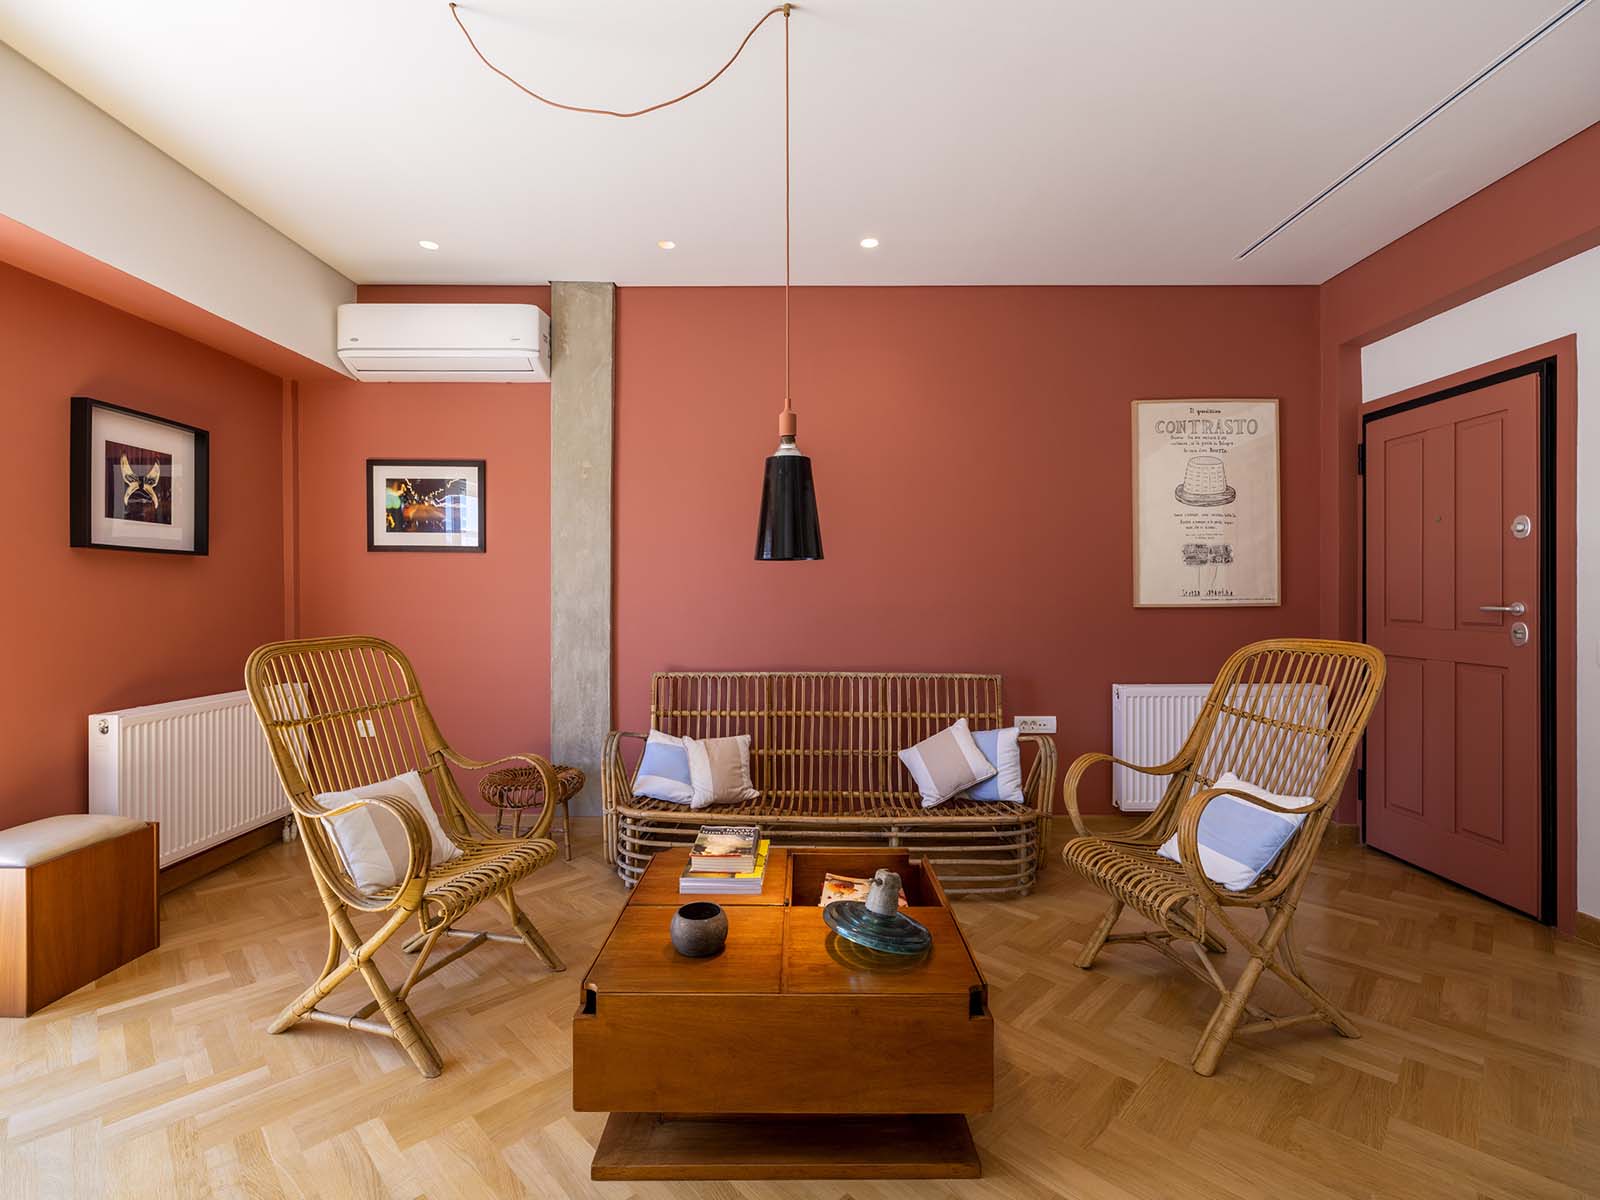 Archisearch 'The Italian Job' apartment renovation in Pagrati, Athens by Nefelia studio